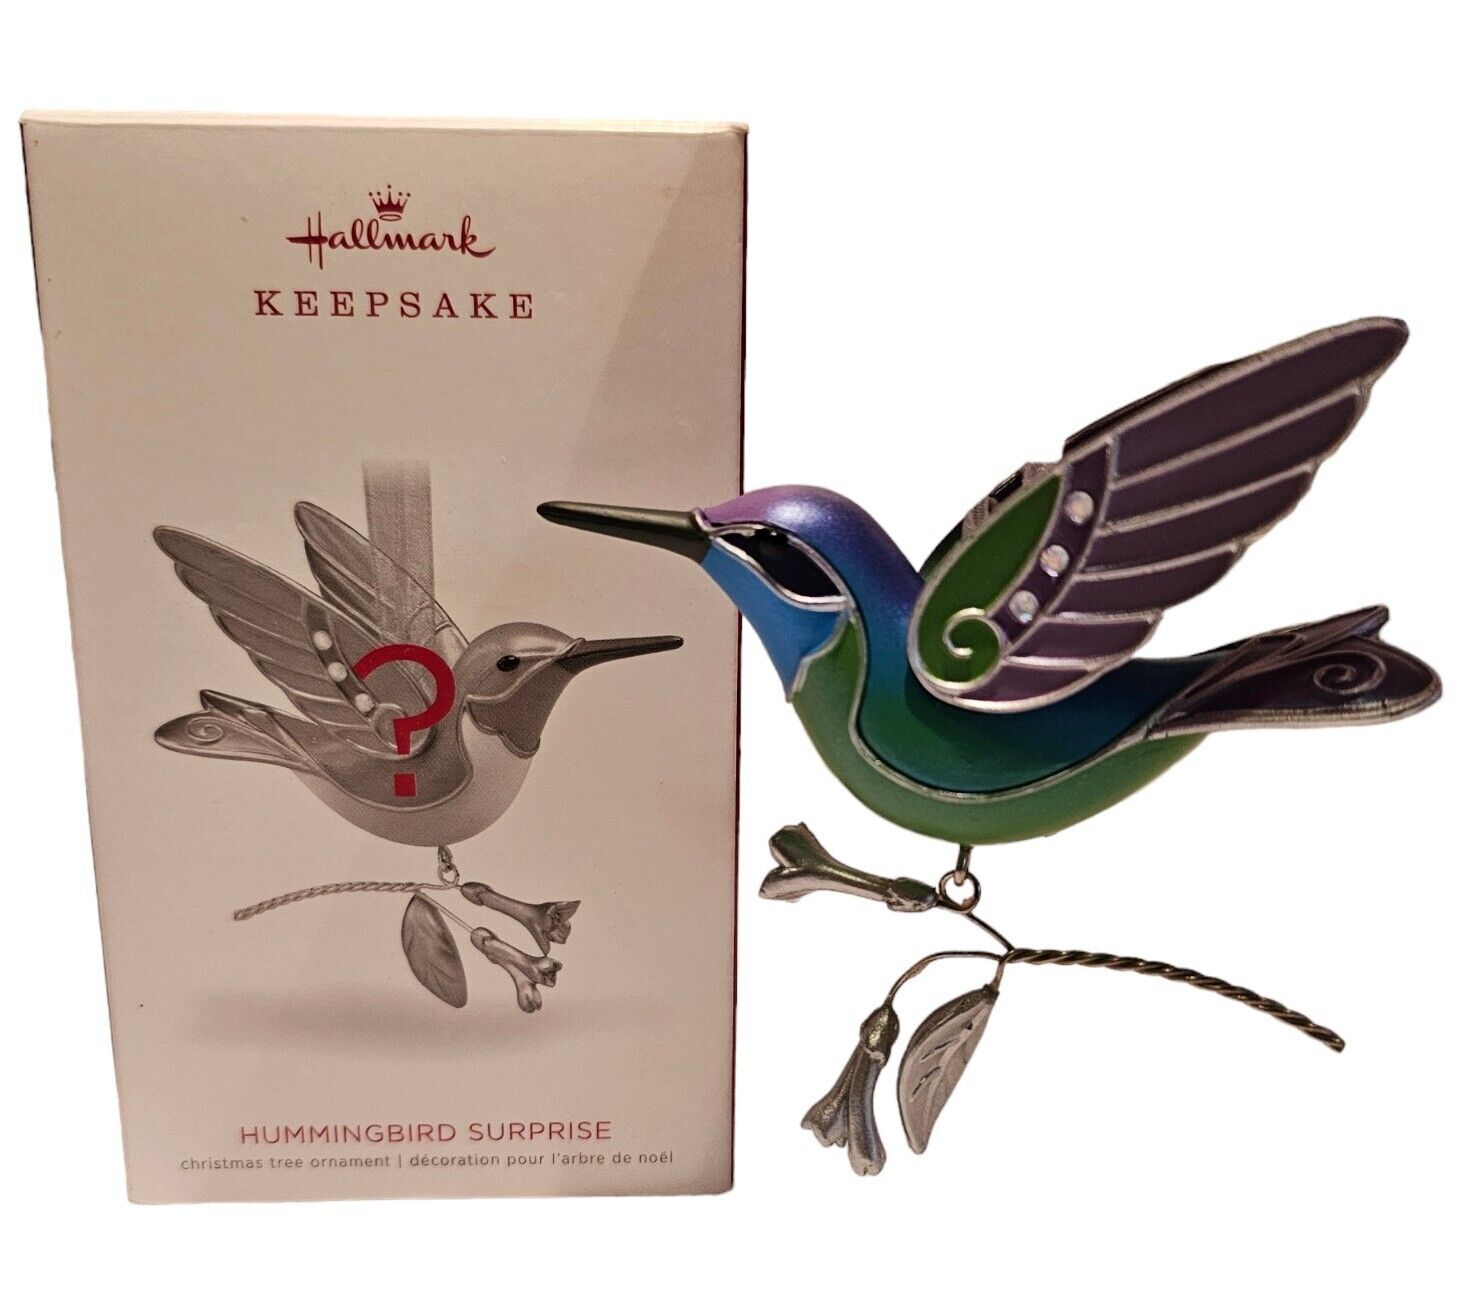 2018 Hallmark Hummingbird Surprise Blue Green Bird Christmas Ornament - Repaint